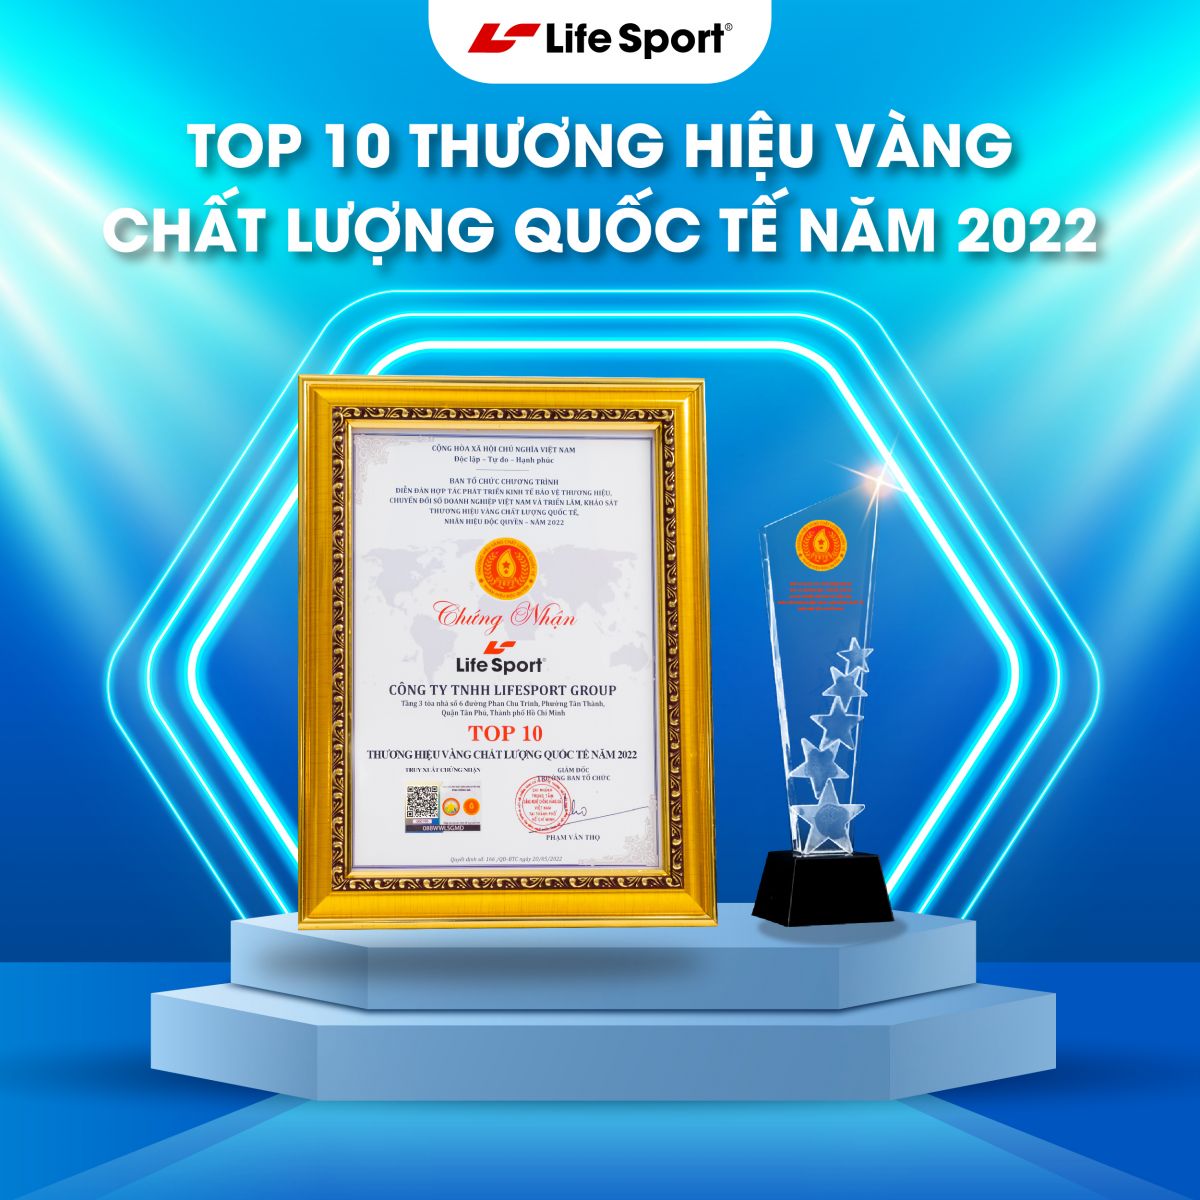 lifesport top 10 thuong hieu vang chat luong quoc te 2022 1